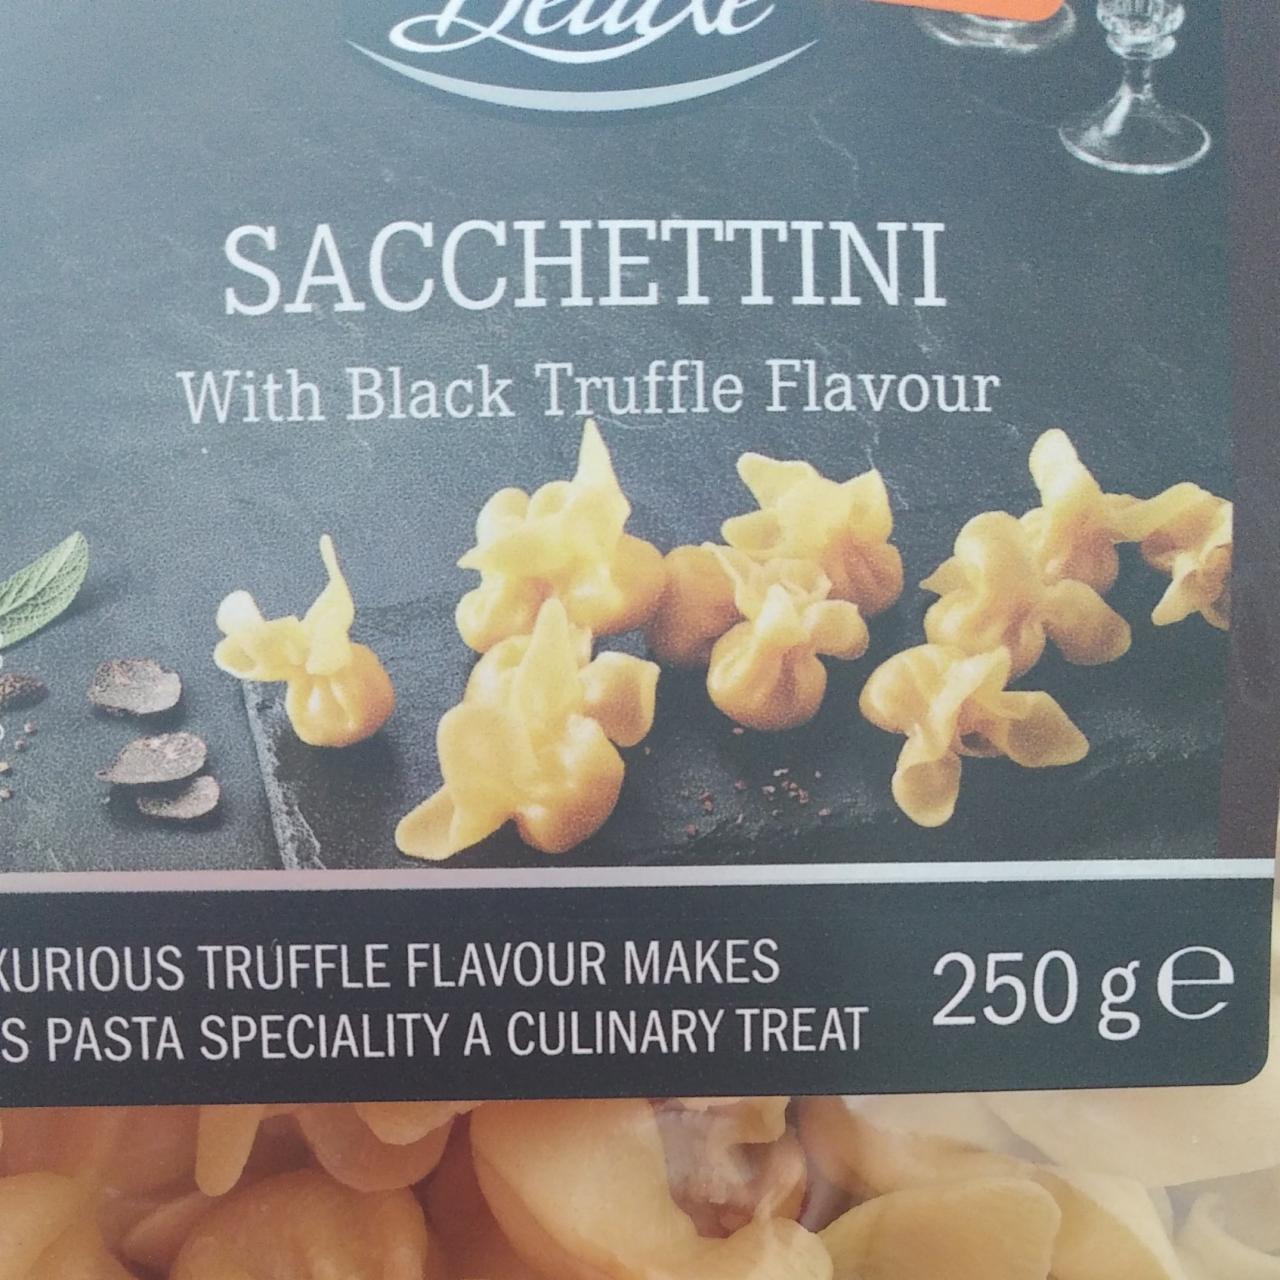 Zdjęcia - Sacchettini with black truffle flavour Deluxe